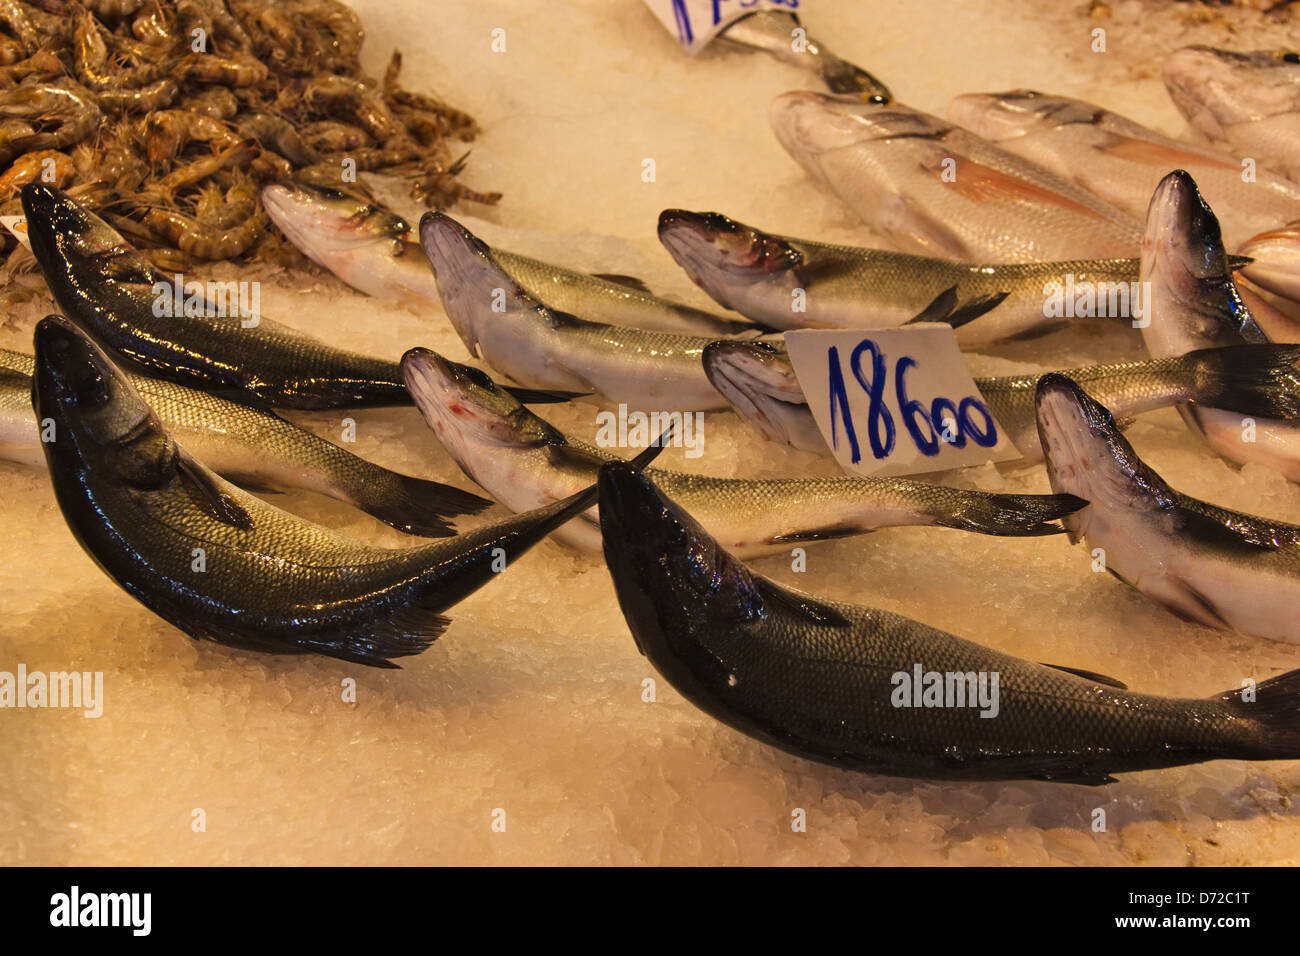 Fish market, Bizerte, Tunisia Stock Photo